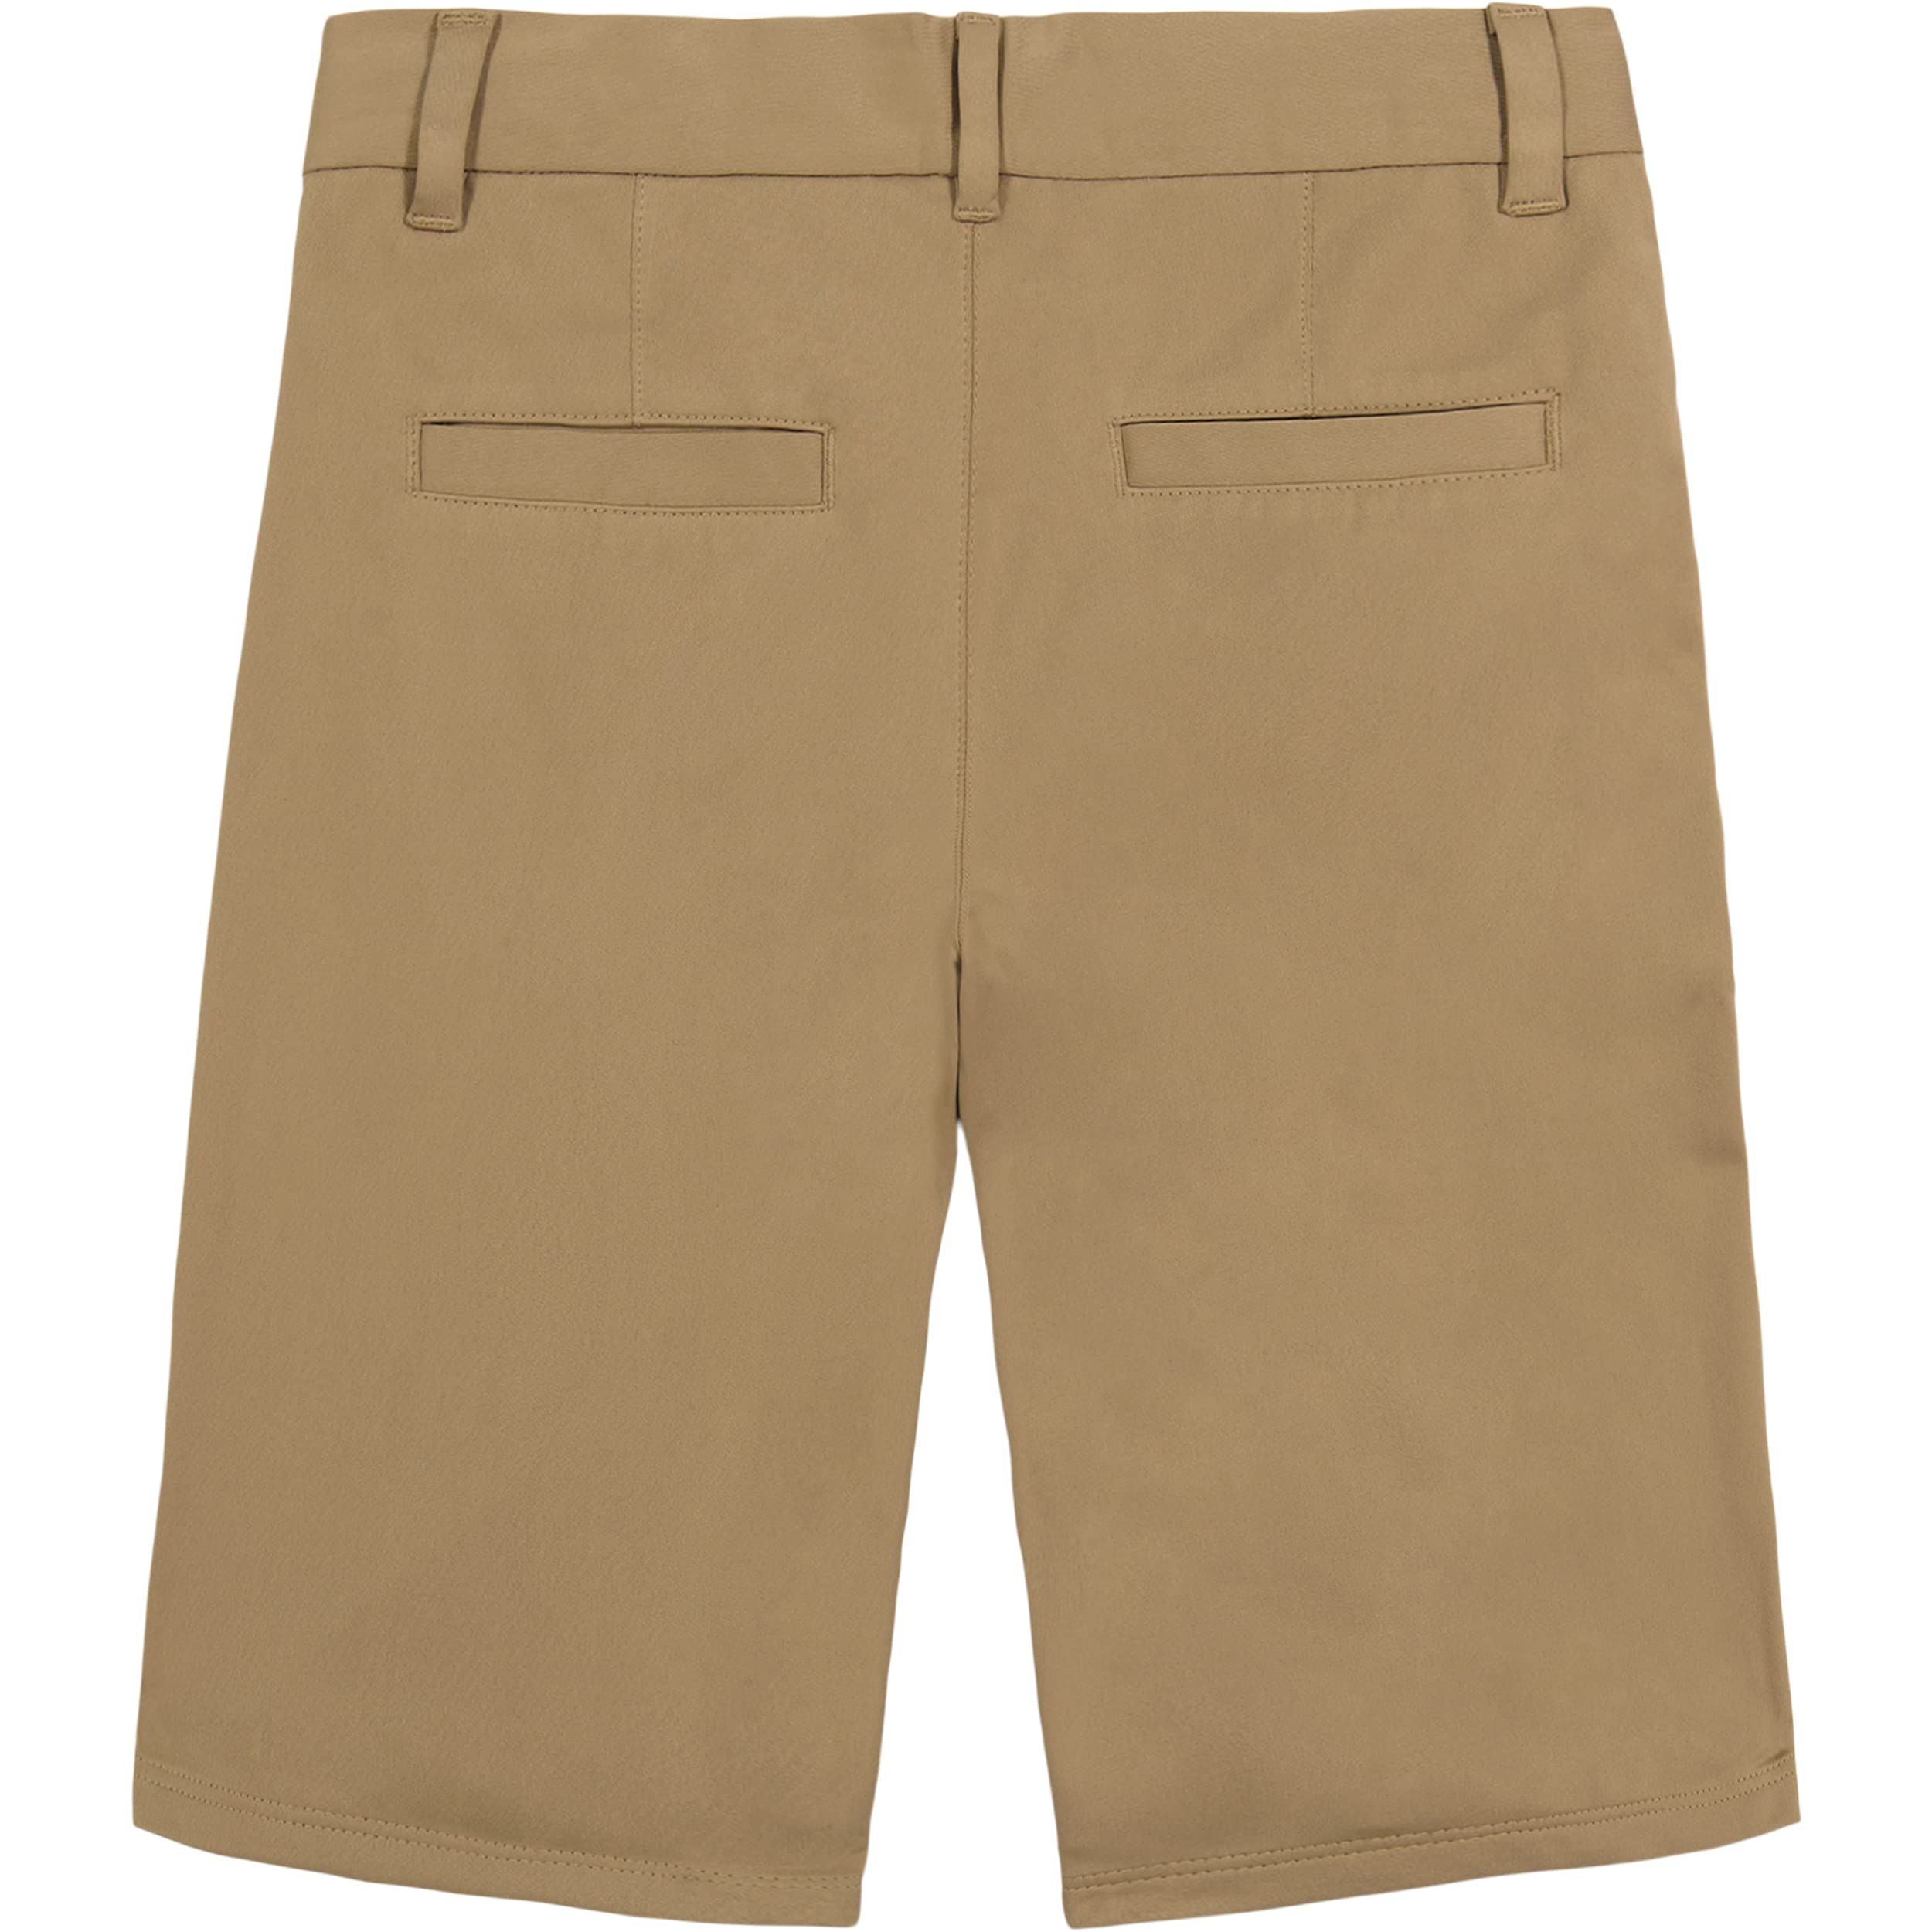 Nautica Boys' School Uniform Warp Knit Shorts, Flat Front & Zipper Closure, Wrinkle Resistant Fabric